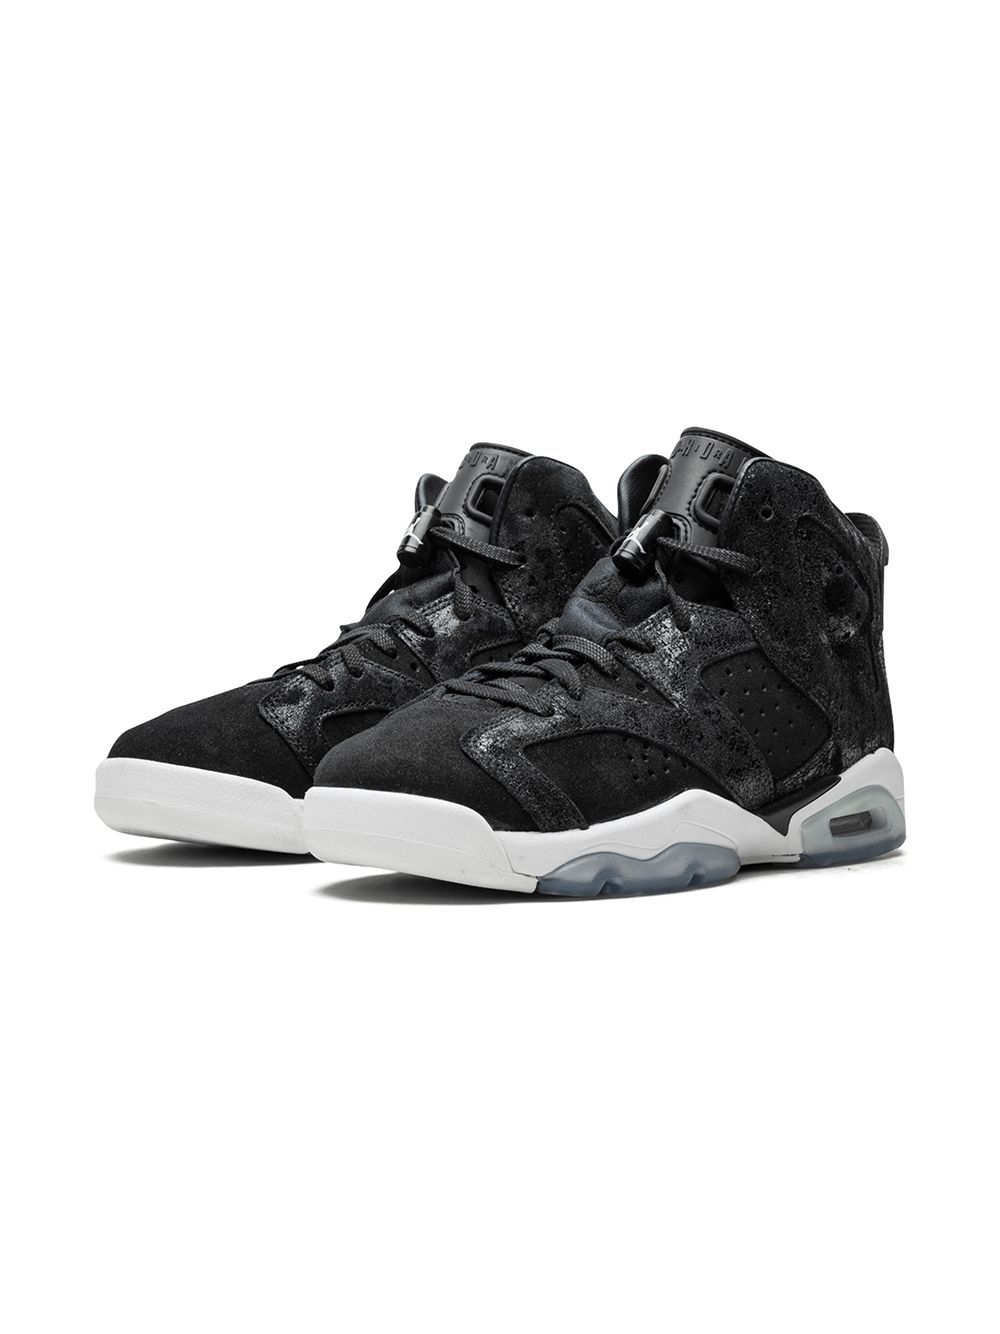 Image 2 of Jordan Kids Air Jordan 6 Retro Prem HC GG "Heiress - Black Suede" sneakers